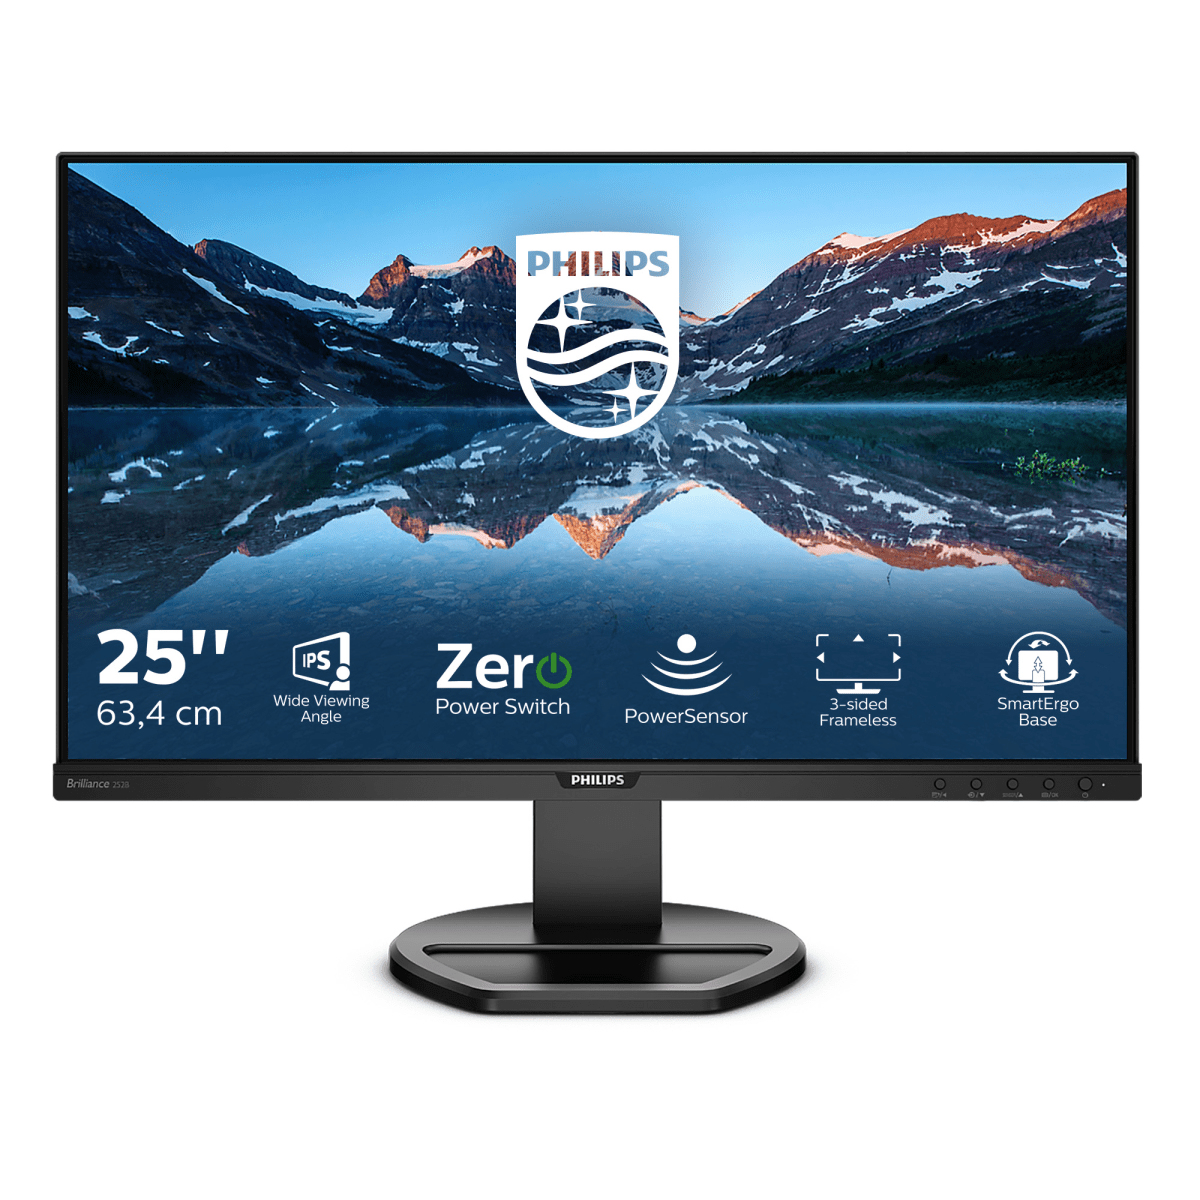 B Line 25" (63.4 cm) LCD monitor with PowerSensor